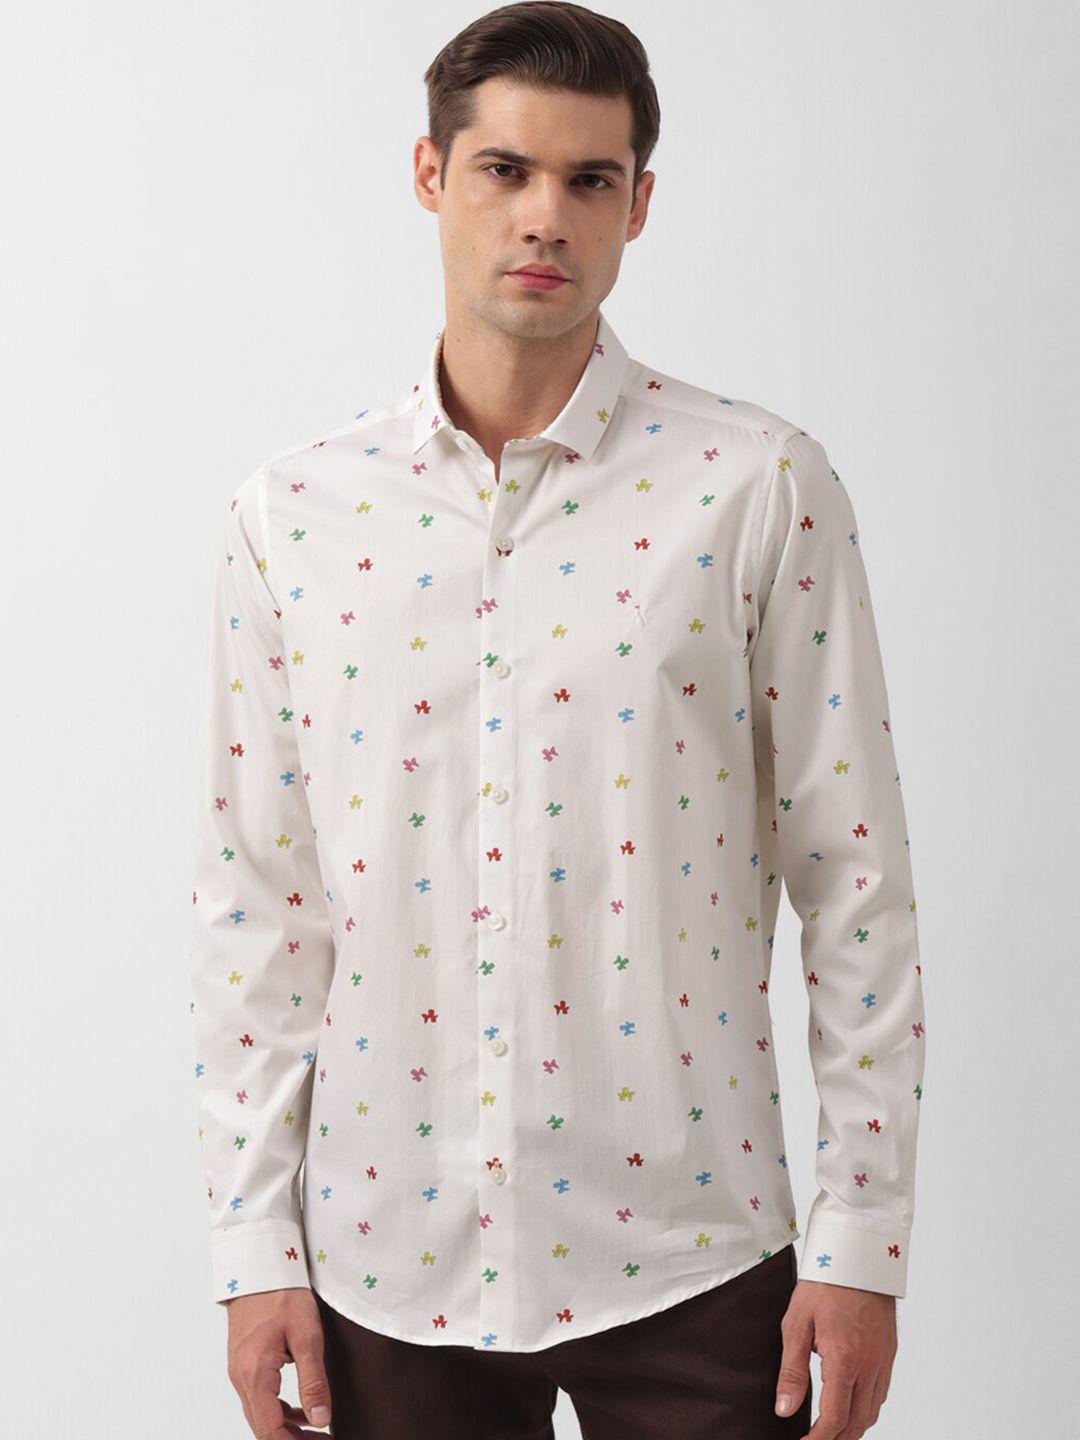 simon carter london slim fit opaque conversational printed pure cotton casual shirt